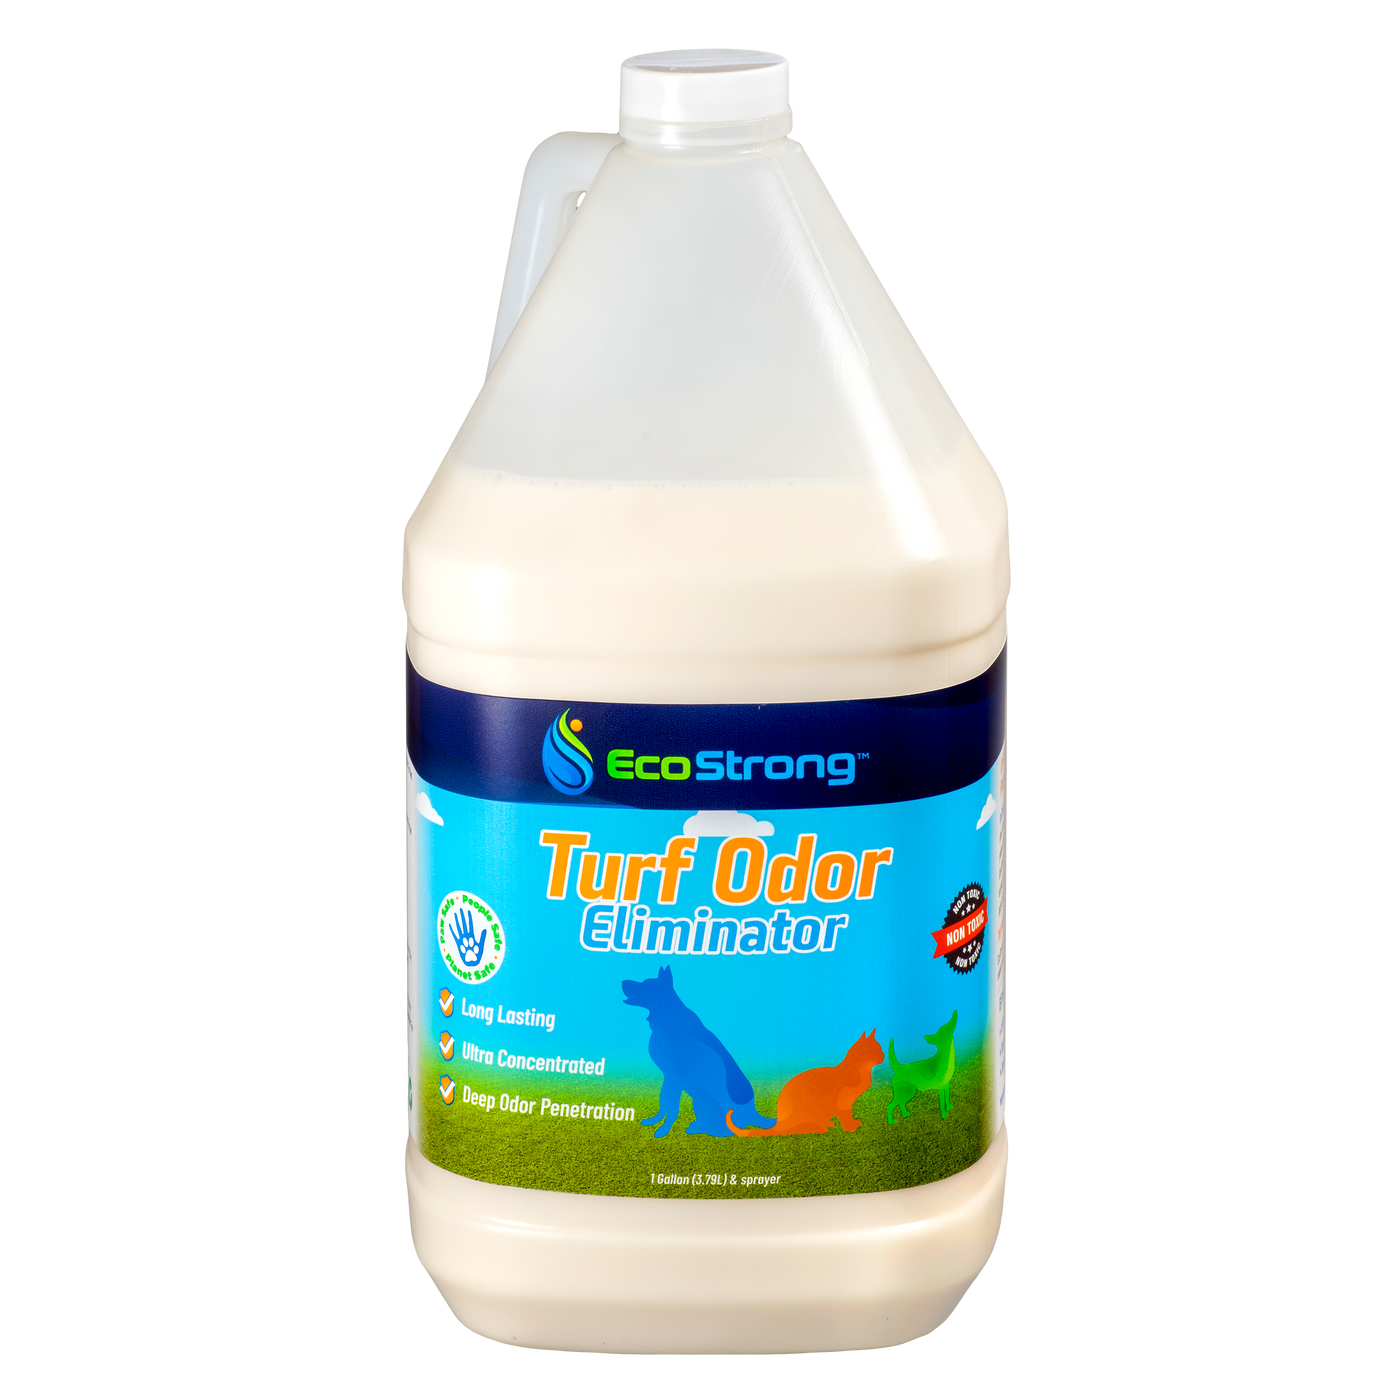 EcoStrong Turf Odor Eliminator#size_1-gallon-jug